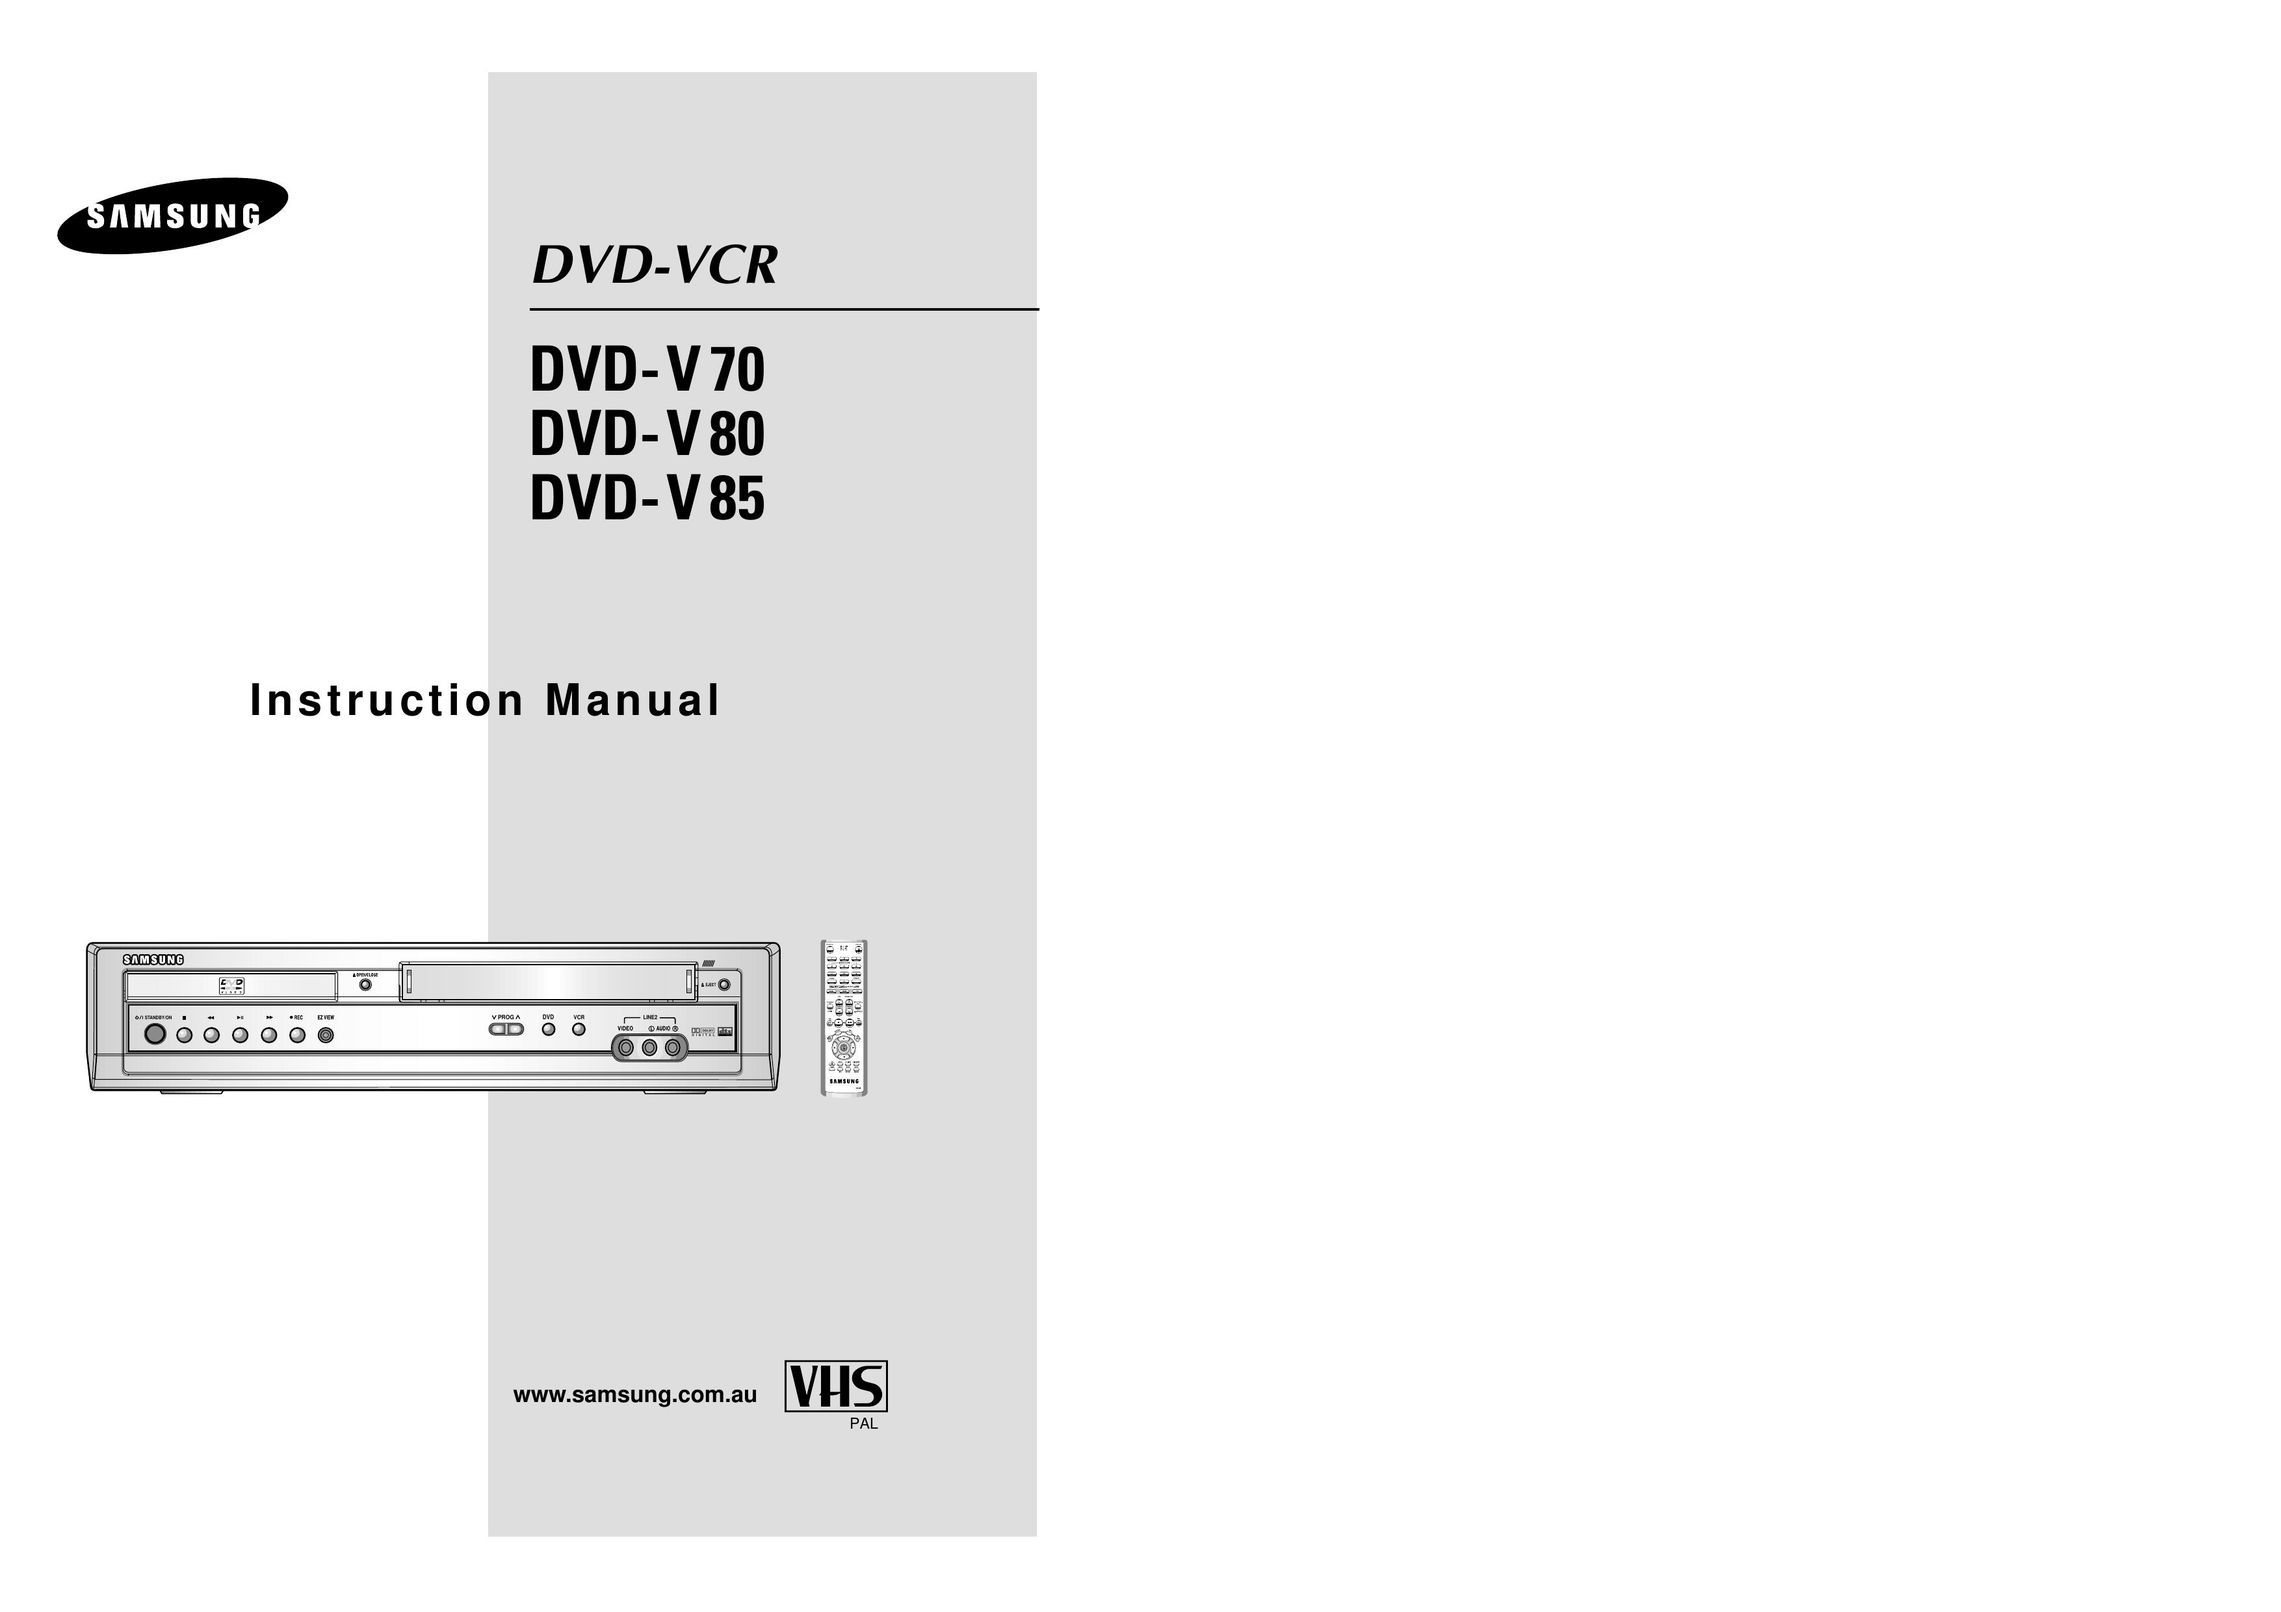 Samsung DVD-V85 VCR User Manual